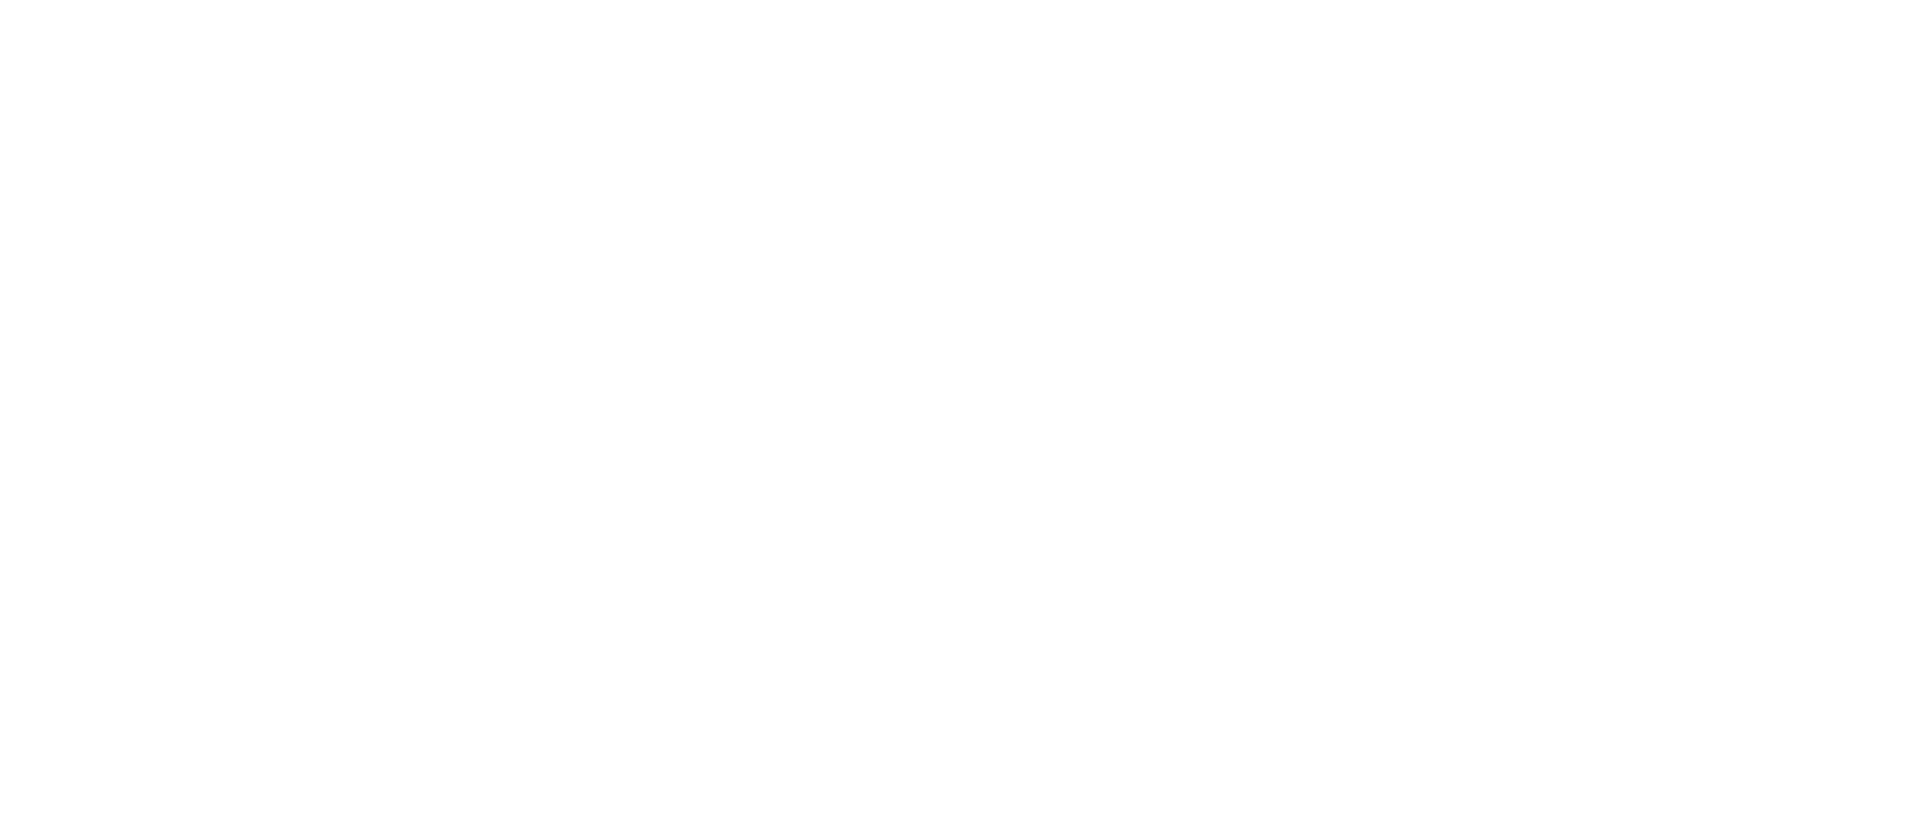 Live! Shop - Texas Live!